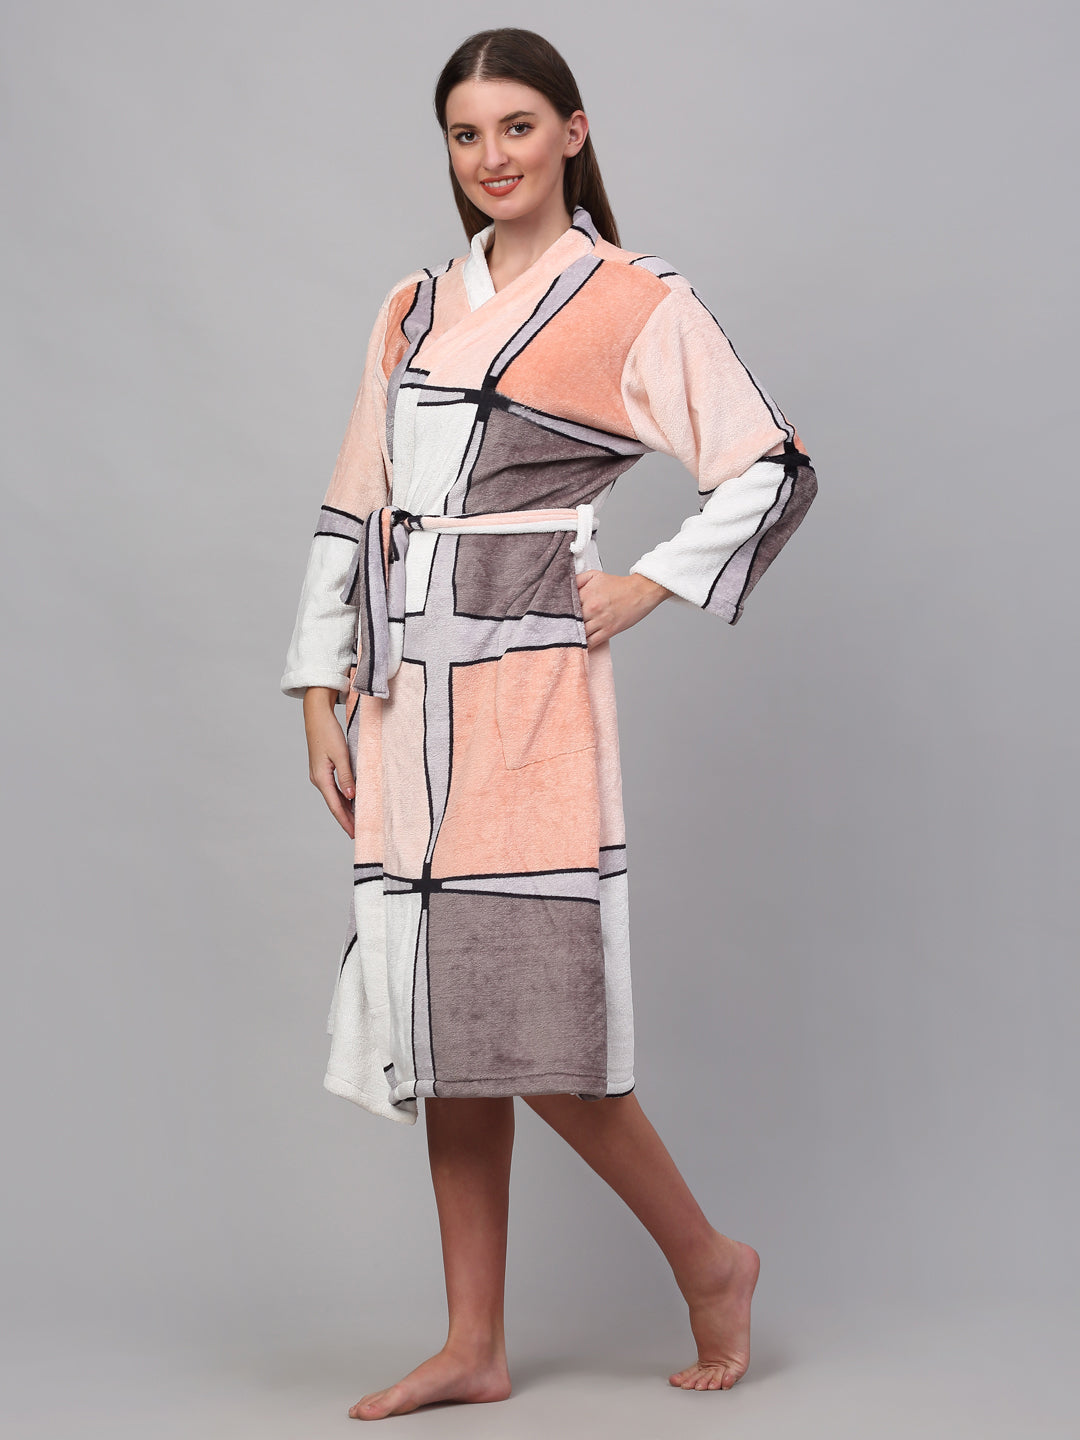 Klotthe Women MultiColor Printed Bath Robe With Belt